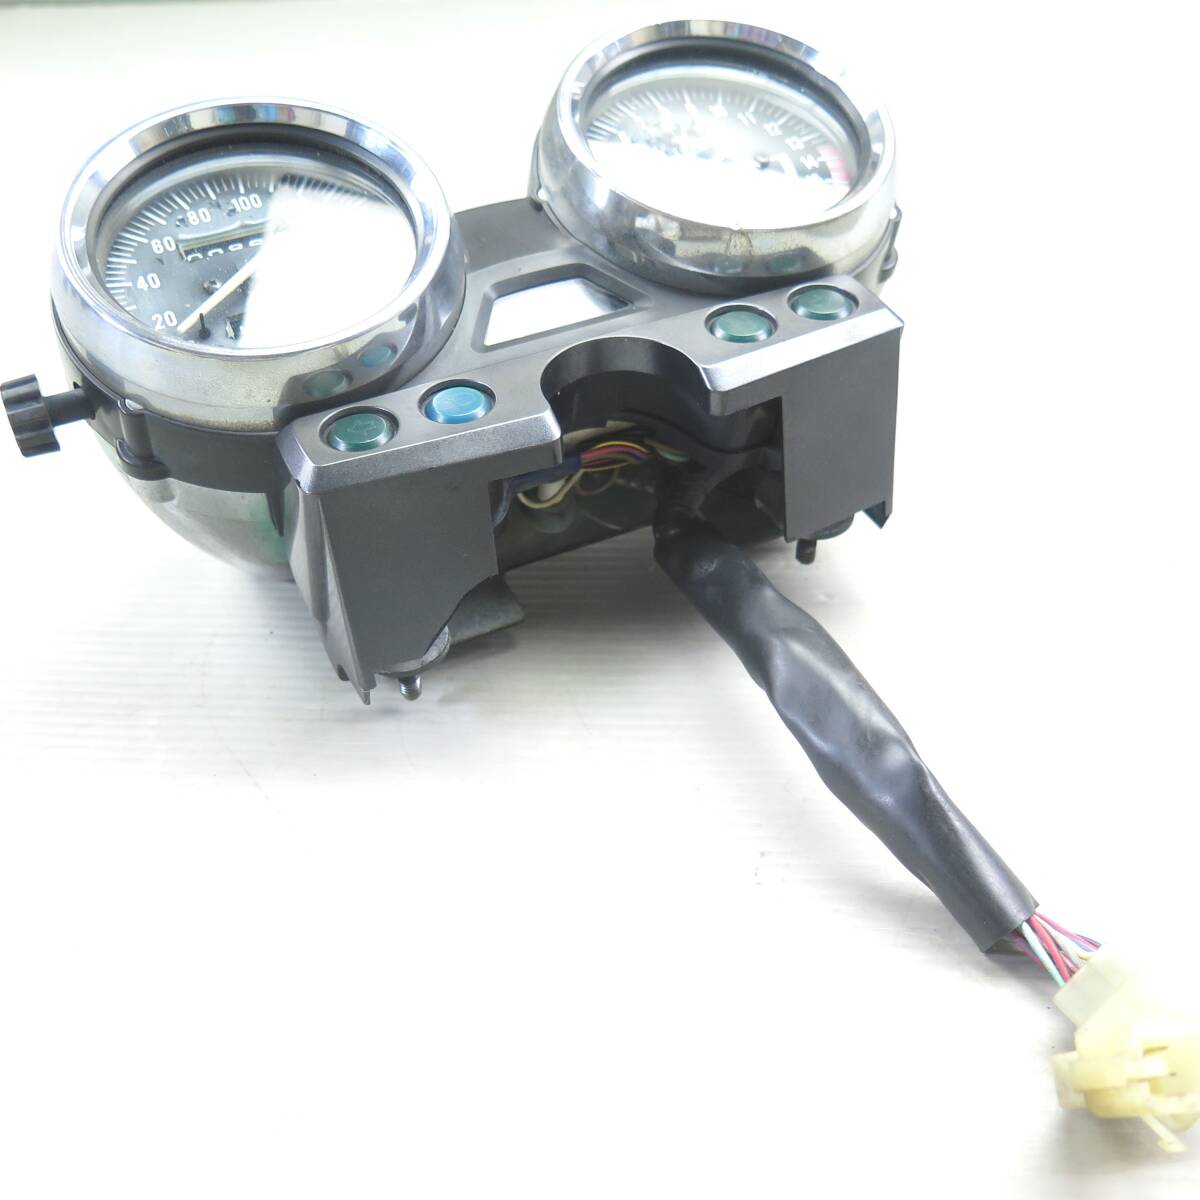 *ZRX400 [ZX400E] original speed meter indicator lens crack Junk used Kawasaki kawasaki KR060408